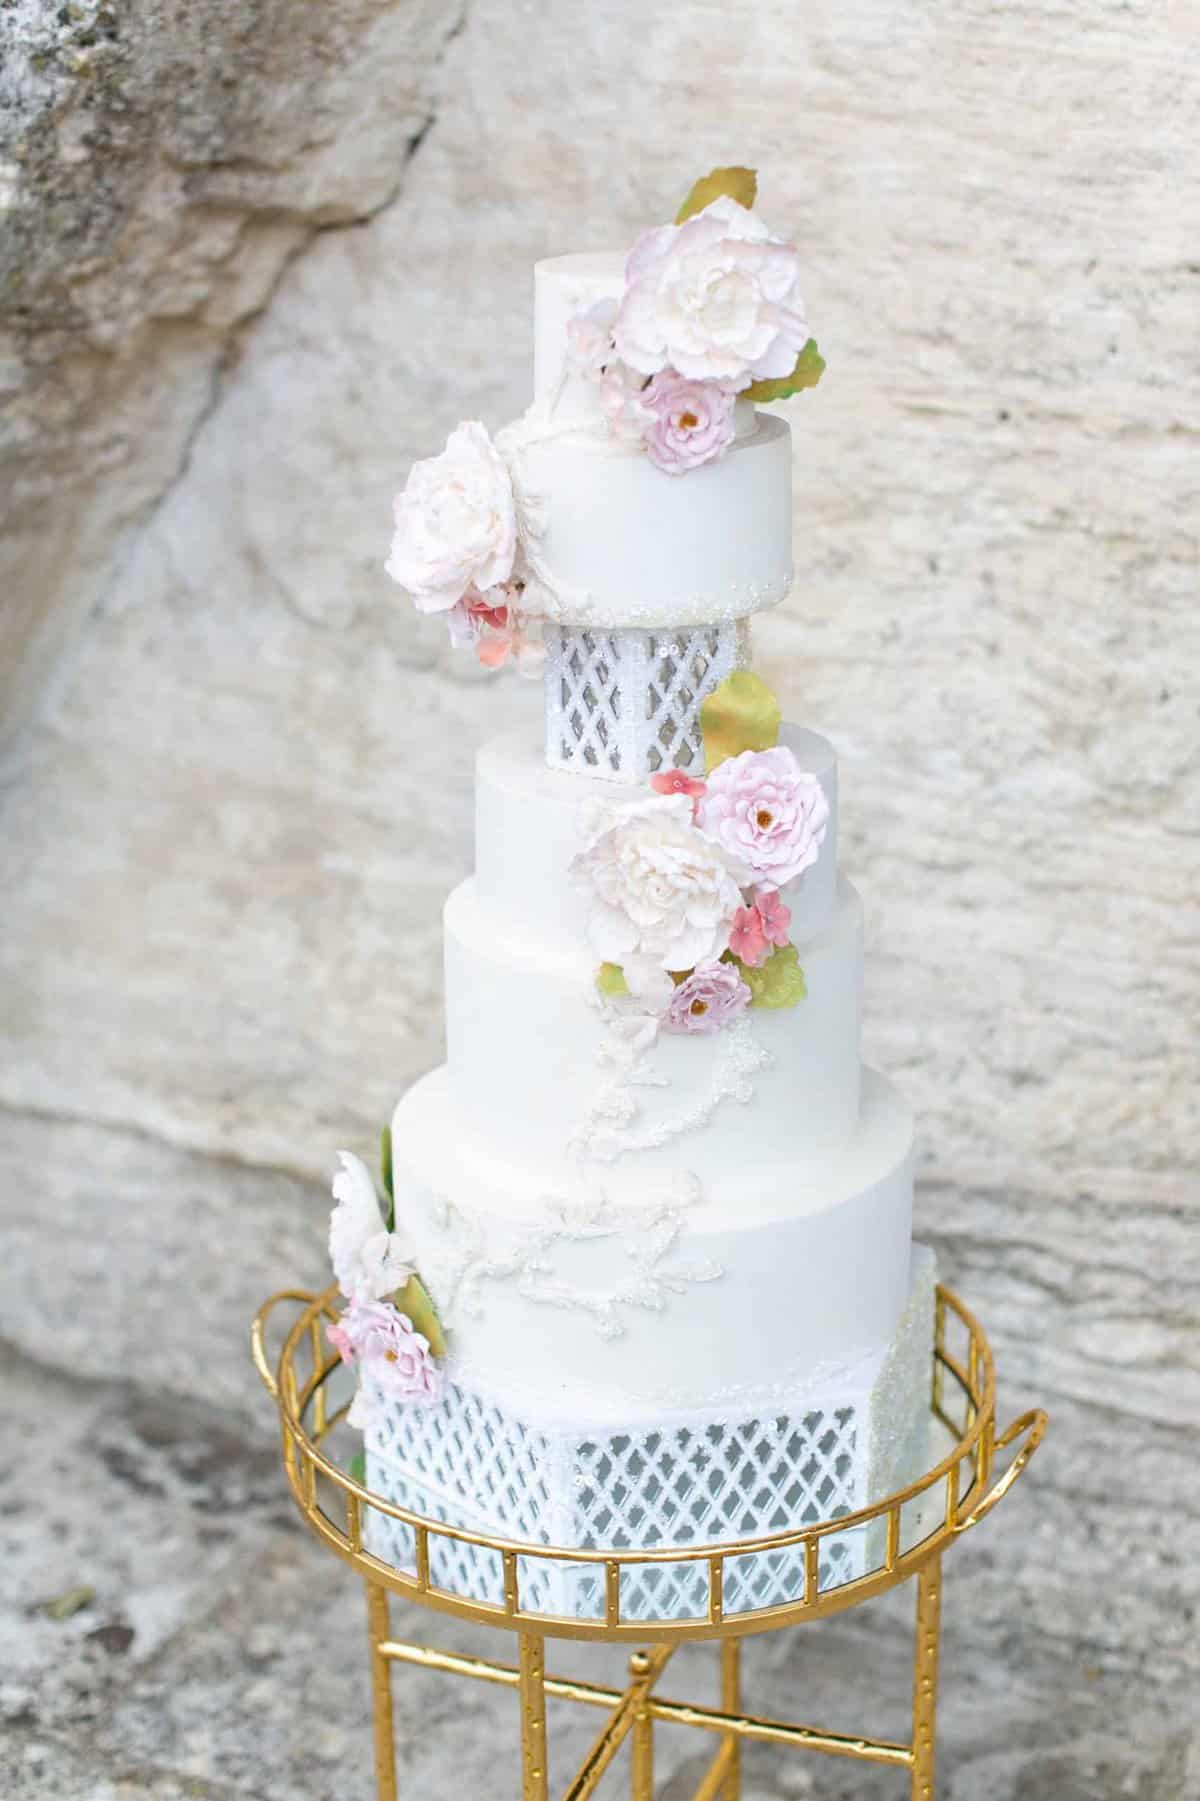 Wedding cake with floral and swarovski crystal details at Borgo Pignano